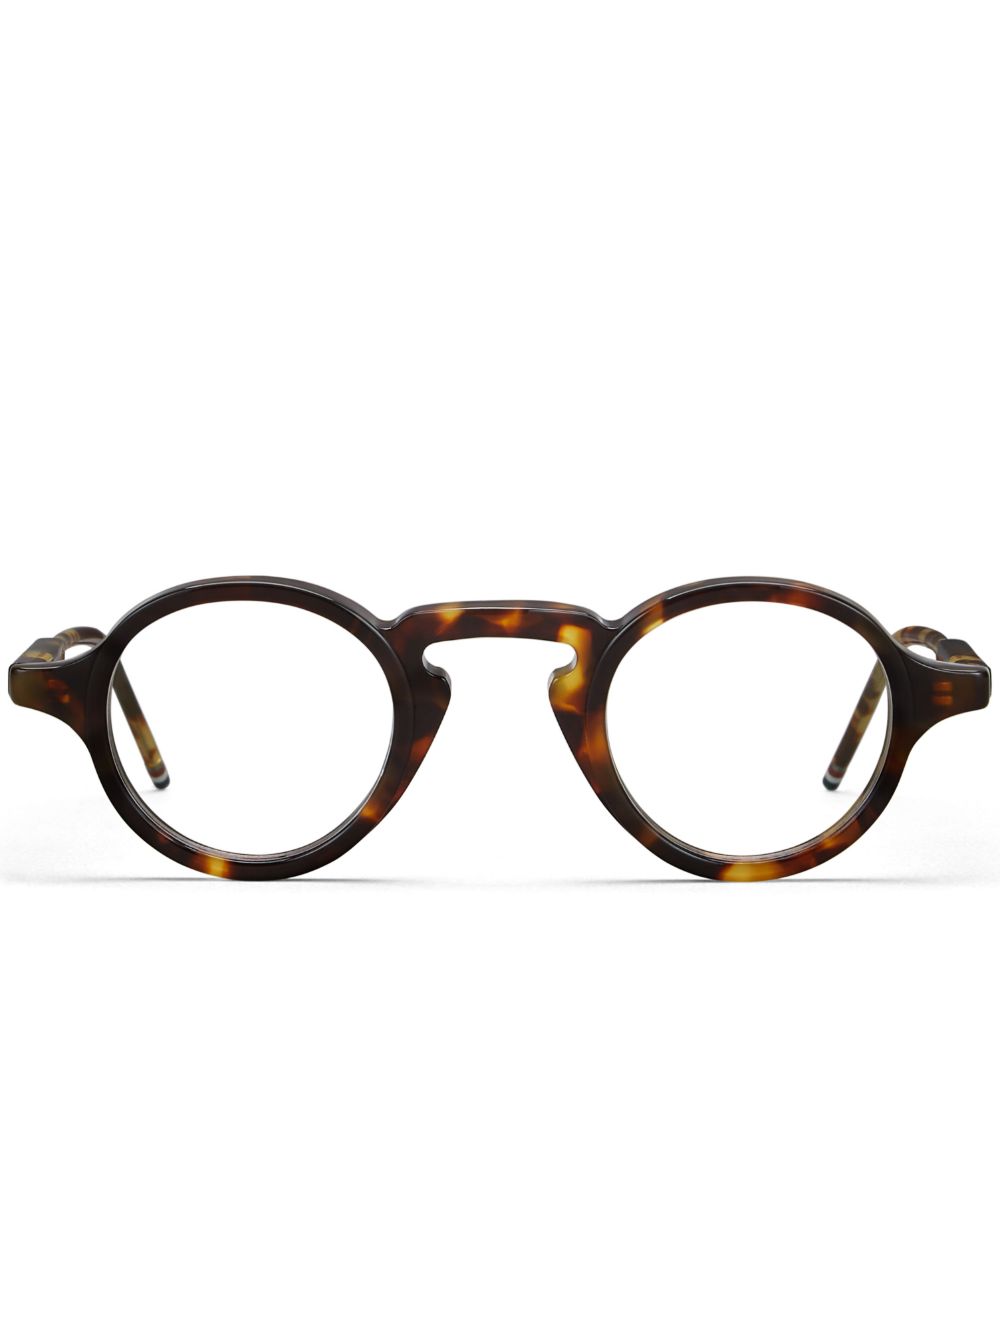 Thom Browne tortoiseshell round-frame glasses von Thom Browne